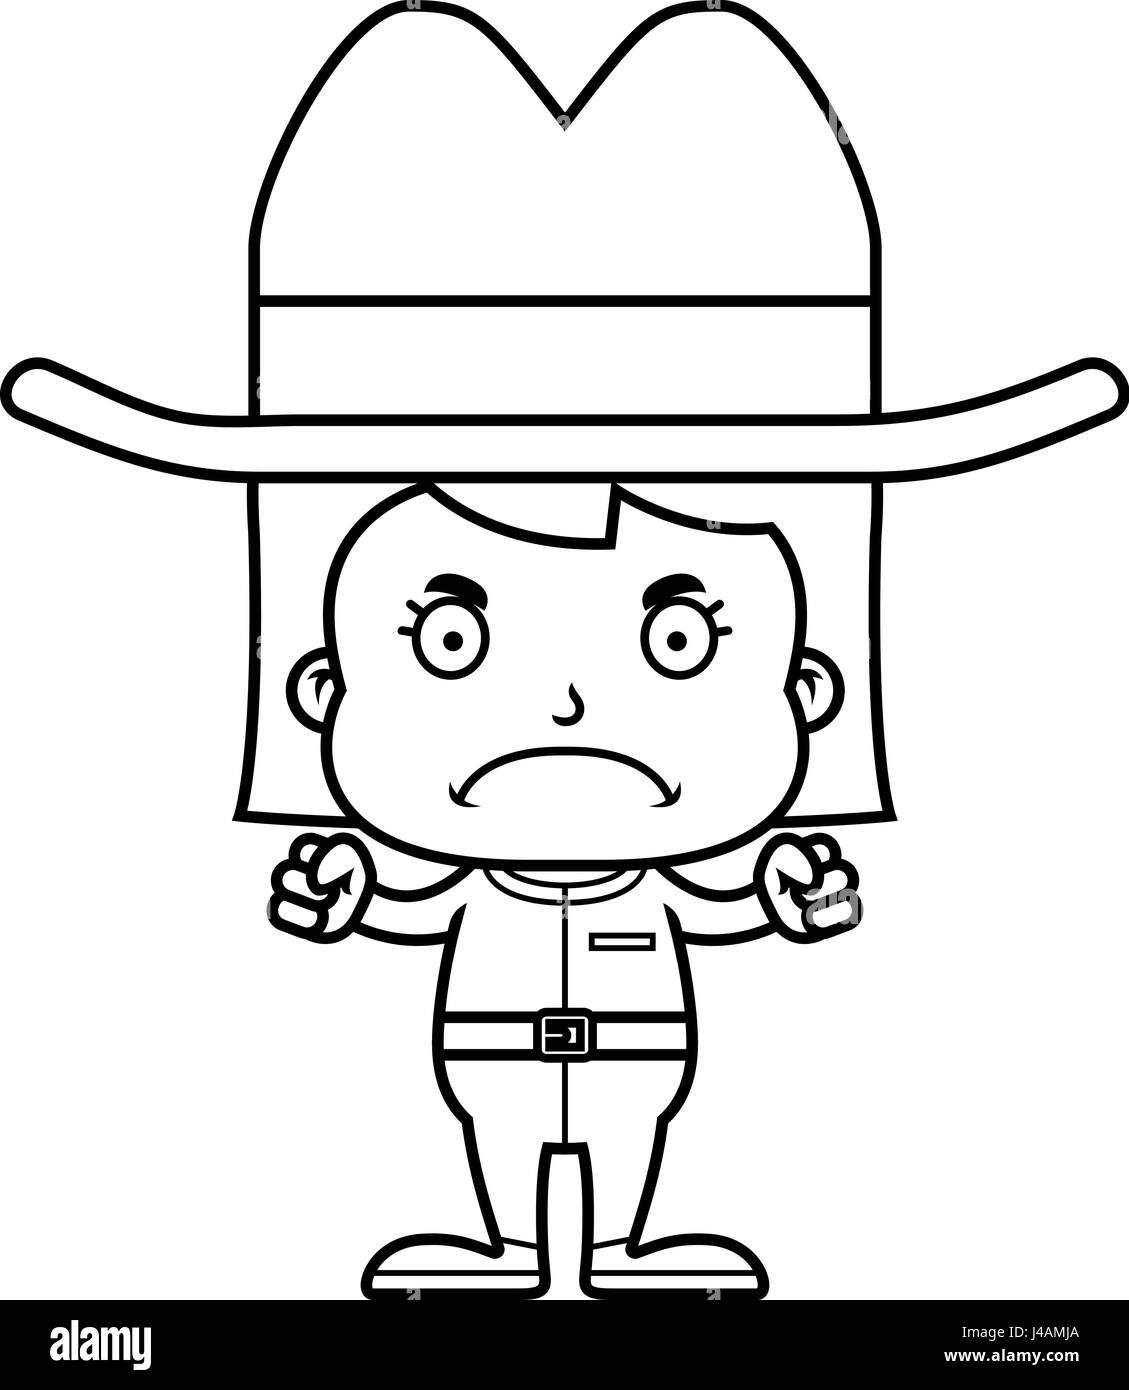 cowboy black and white cartoon